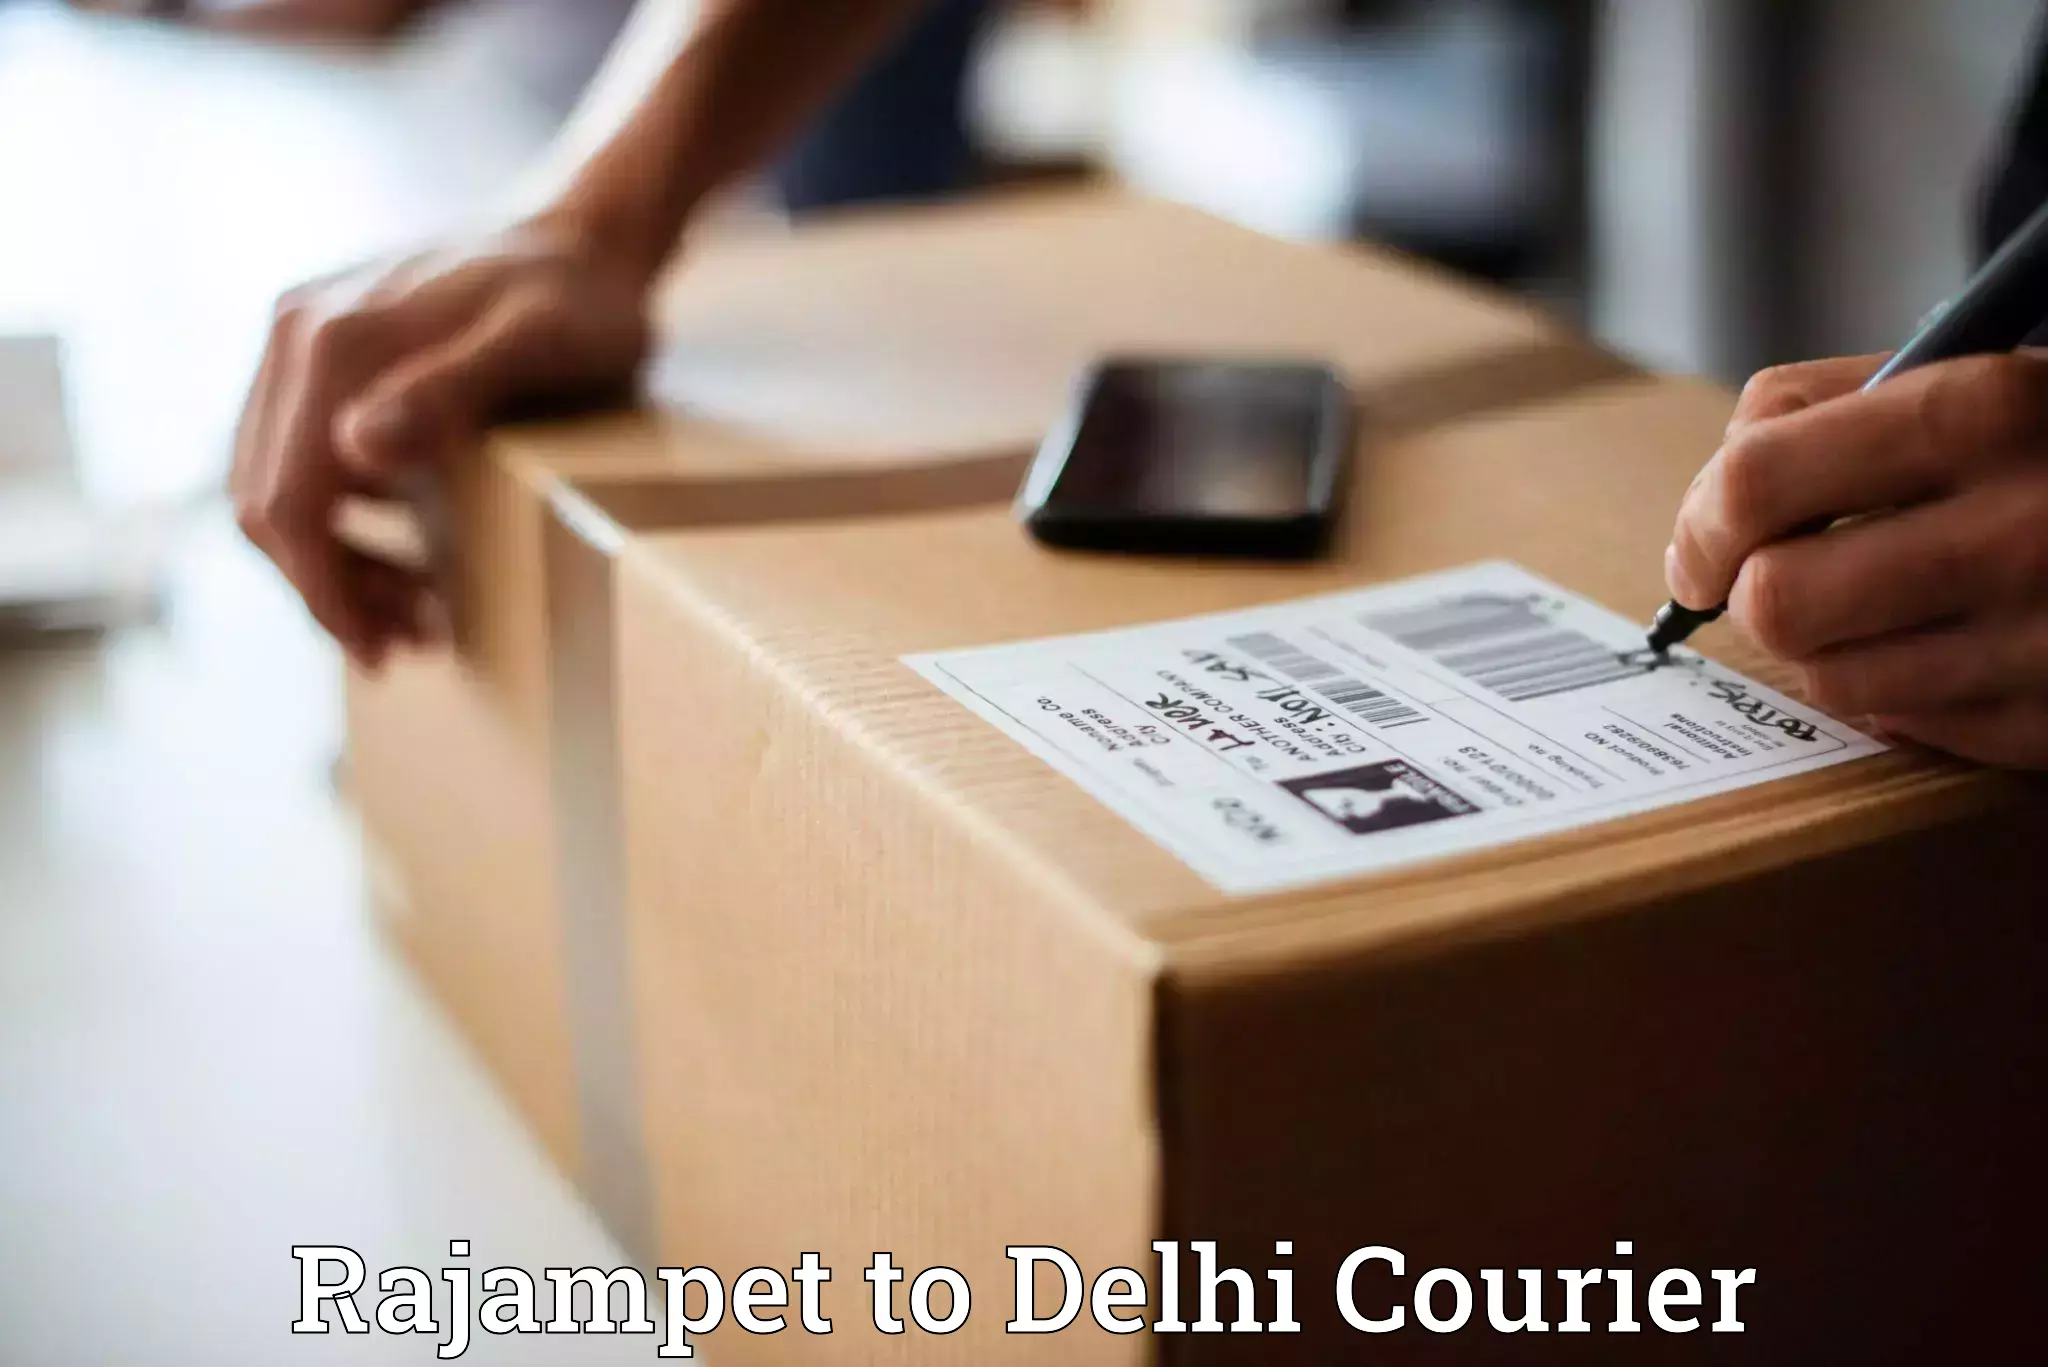 Logistics service provider Rajampet to Delhi